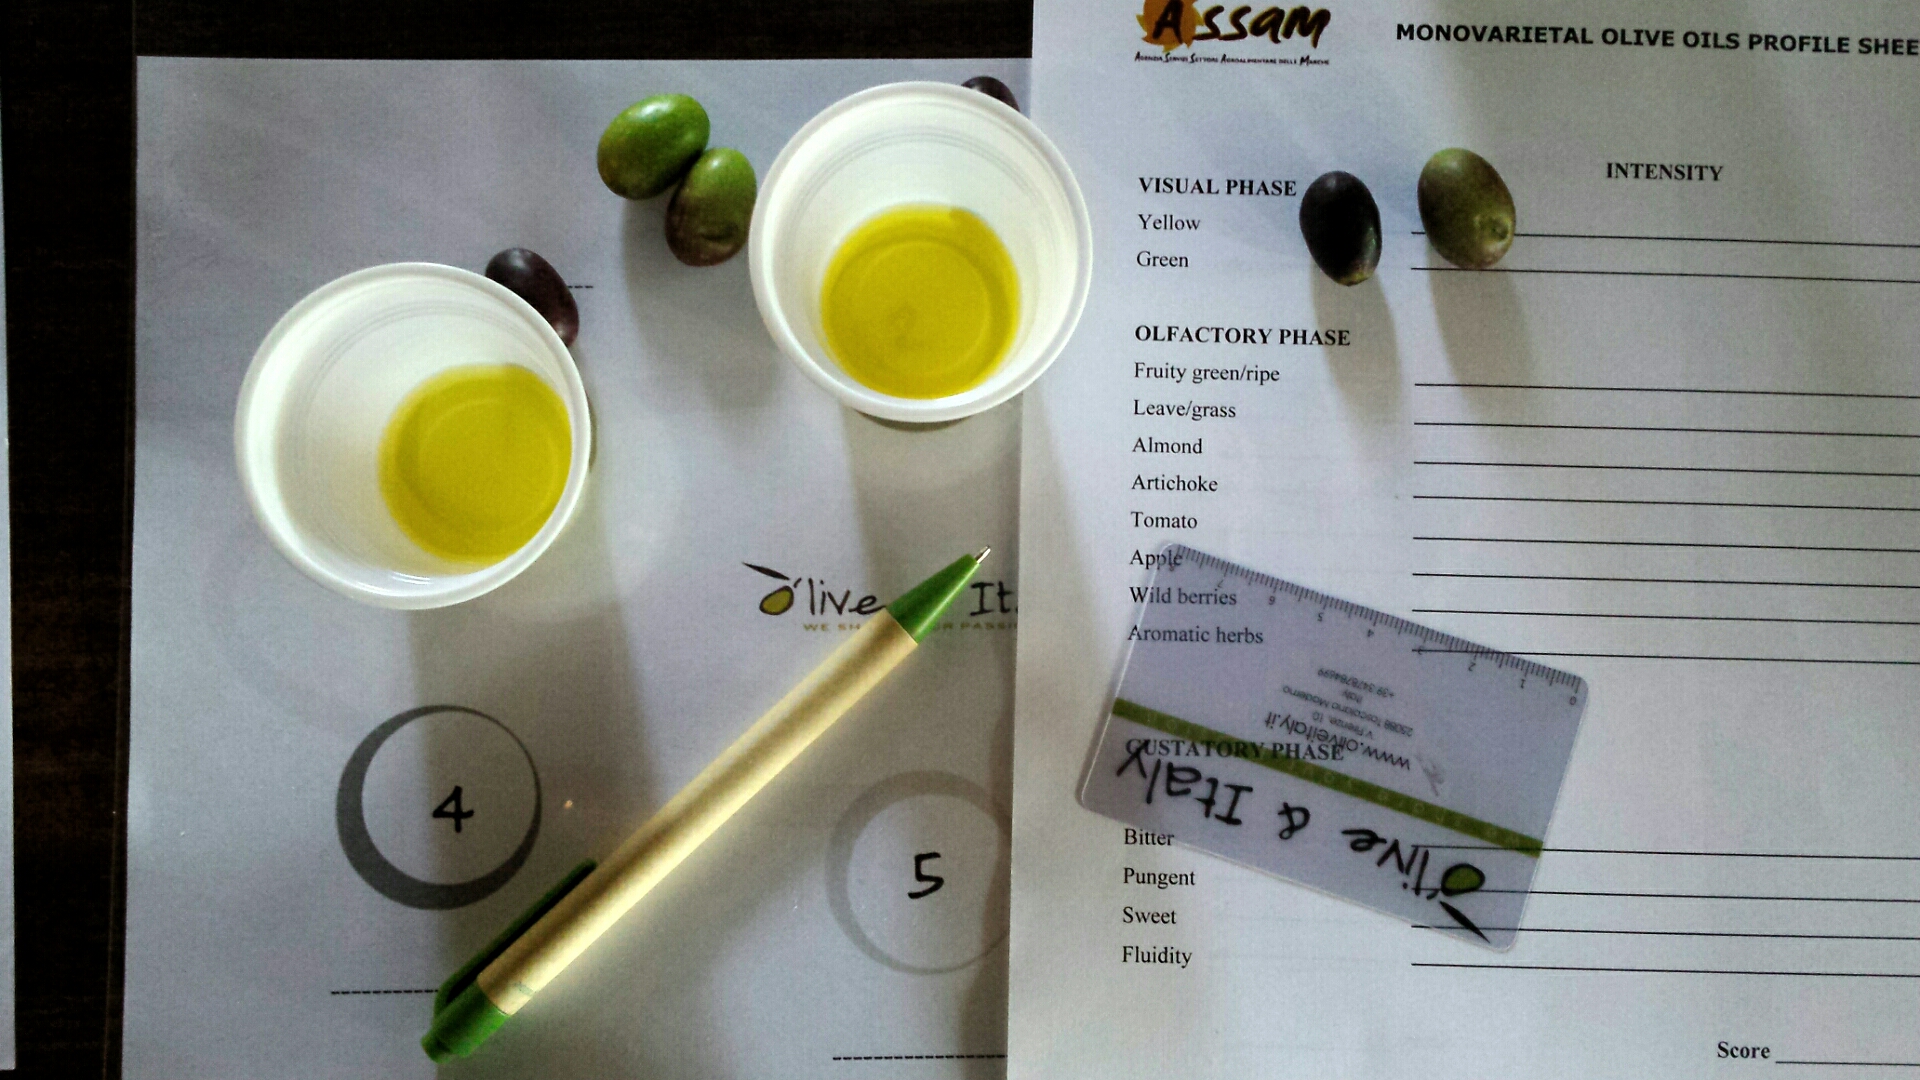 profesjonalne formularze do oceny oliwy z oliwek